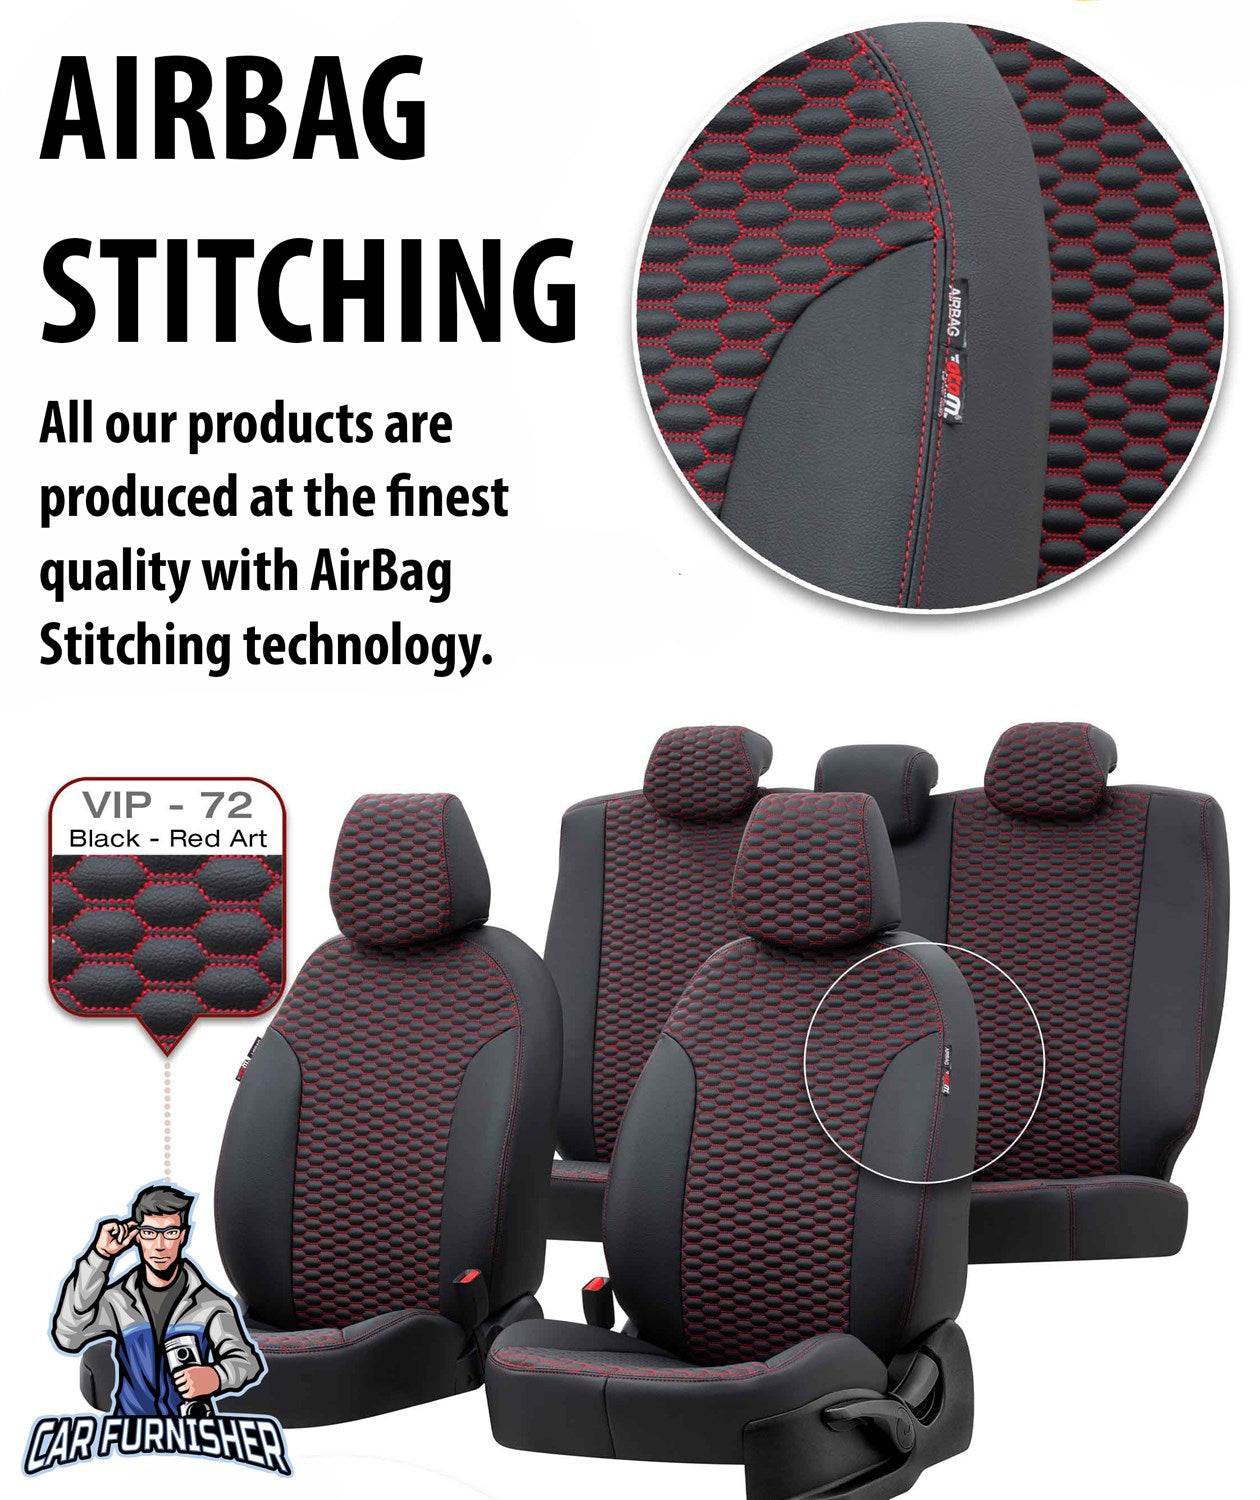 Citroen C-Elysee Car Seat Covers 2012-2023 Tokyo Design Ivory Full Set (5 Seats + Handrest) Full Leather